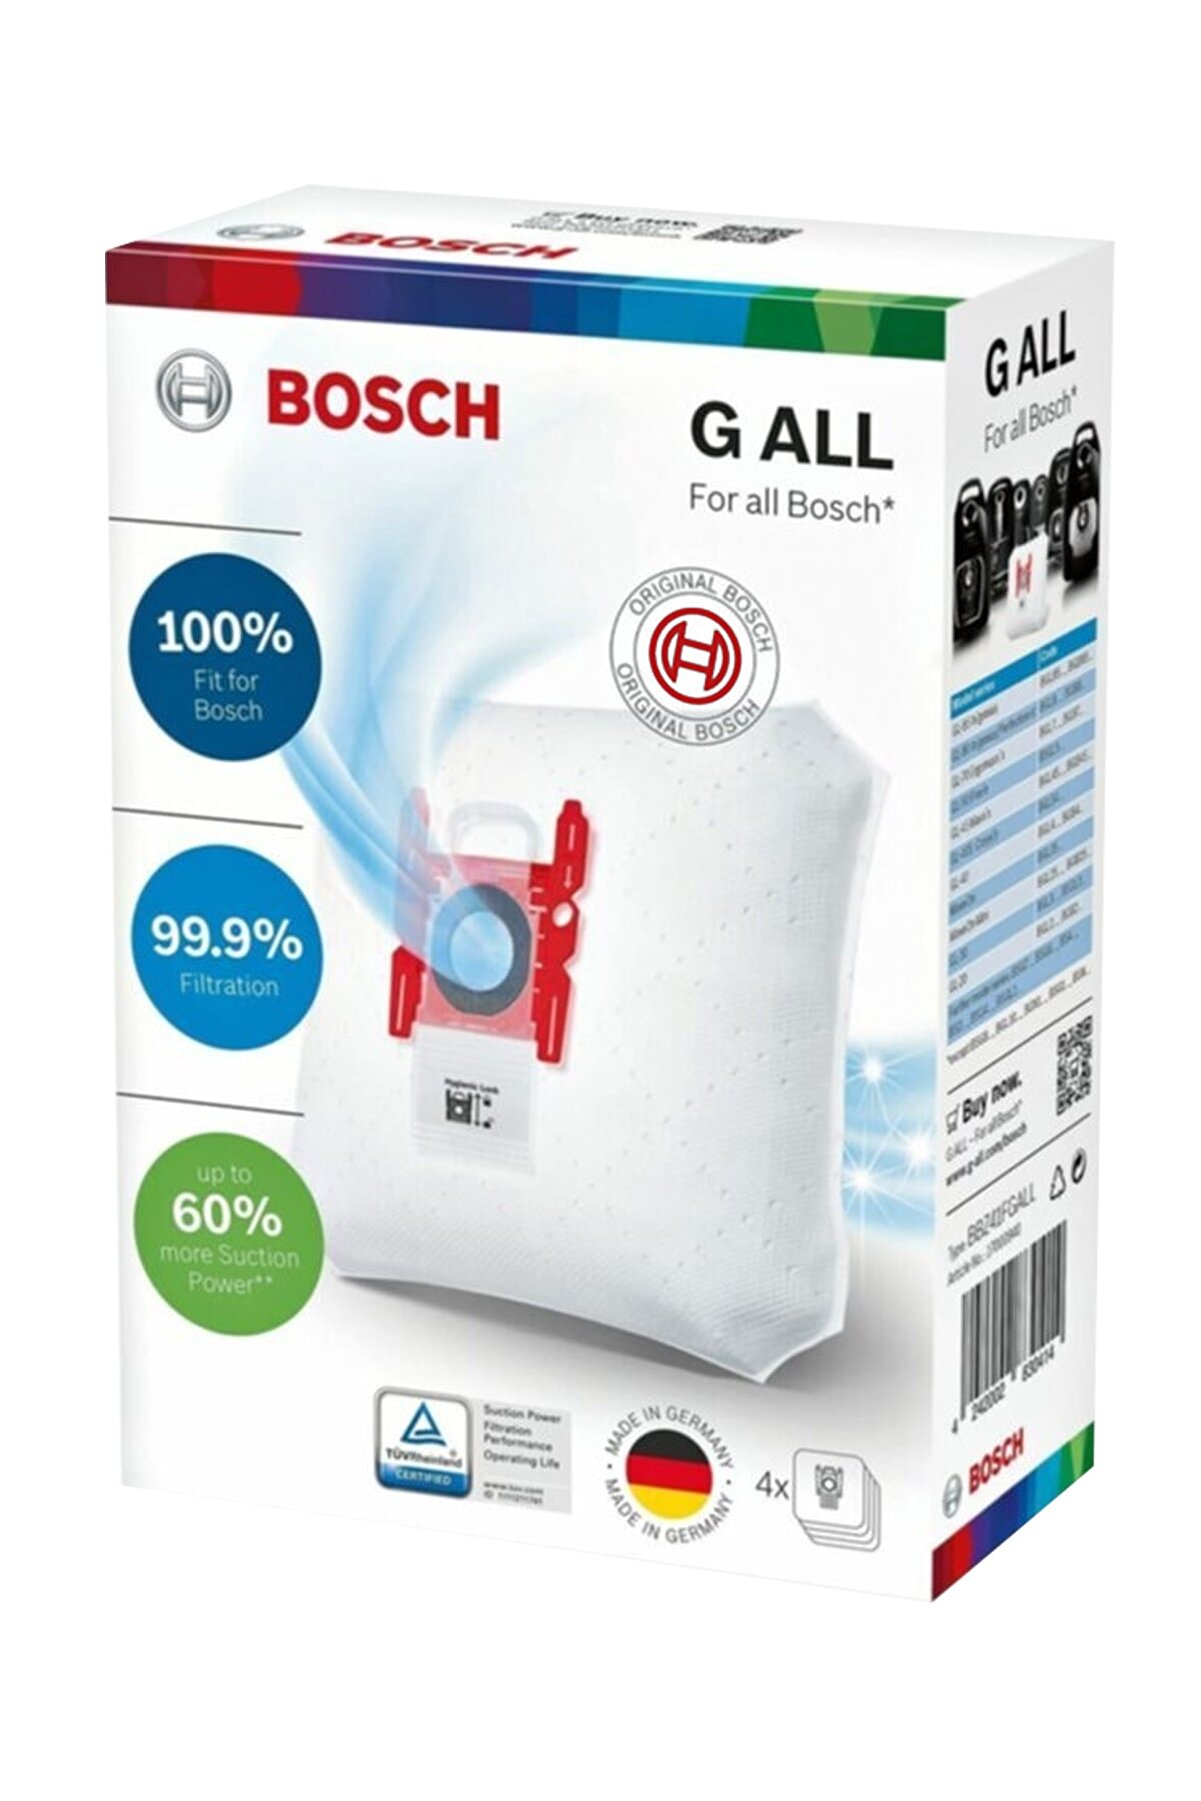 Bosch Sphera 30 G All Toz Torbası Kutulu